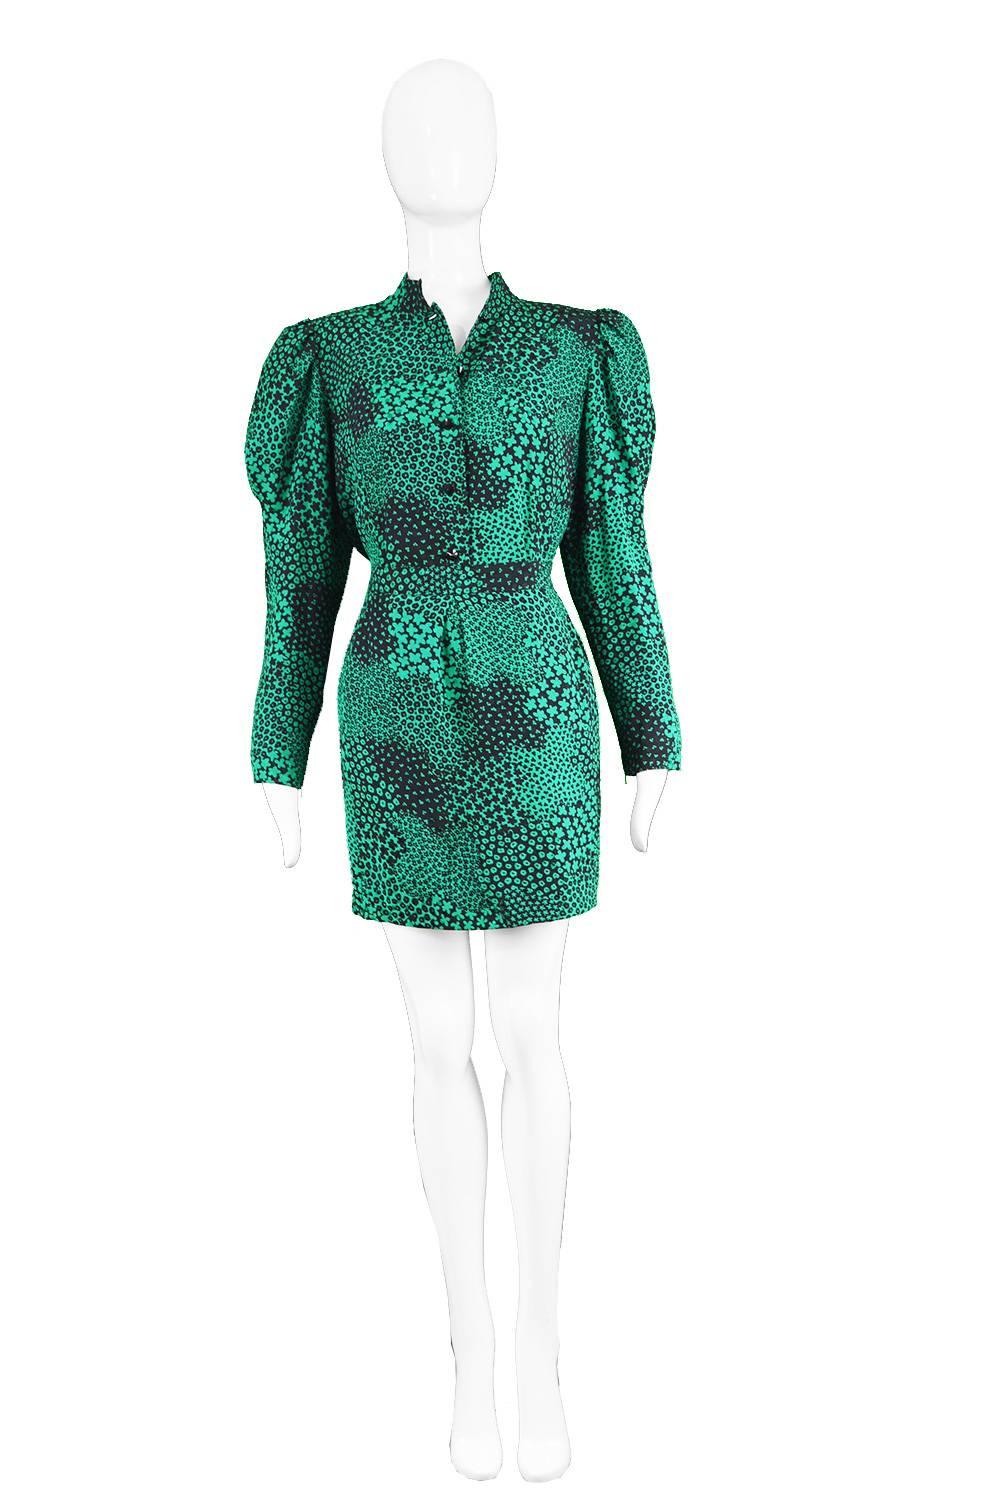 Guy Laroche Vintage 1980s Green & Black Silk Two Piece Blouse & Skirt Suit


Estimated Size: UK 12/ US 8/ EU 40. Please check measurements. 
Shirt
Bust - 38” / 96cm (has a slightly loose fit like most blouses)
Waist - 34” / 86cm
Length (Shoulder to